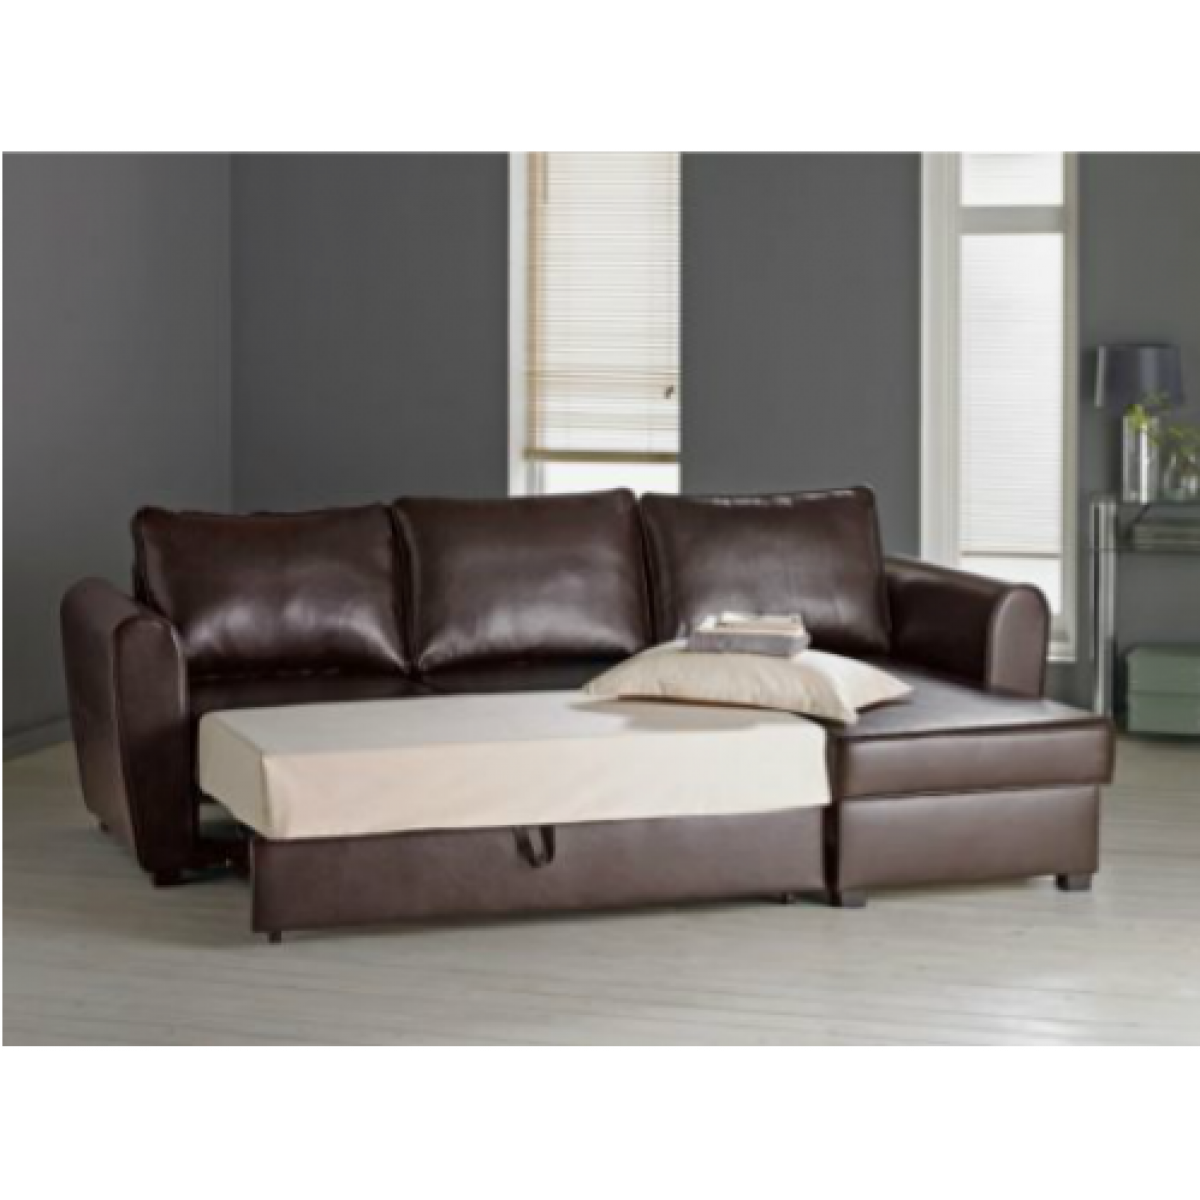 Chic New Siena Fabric Corner Sofa Bed with Storage - Charcoal. corner sofa bed with storage